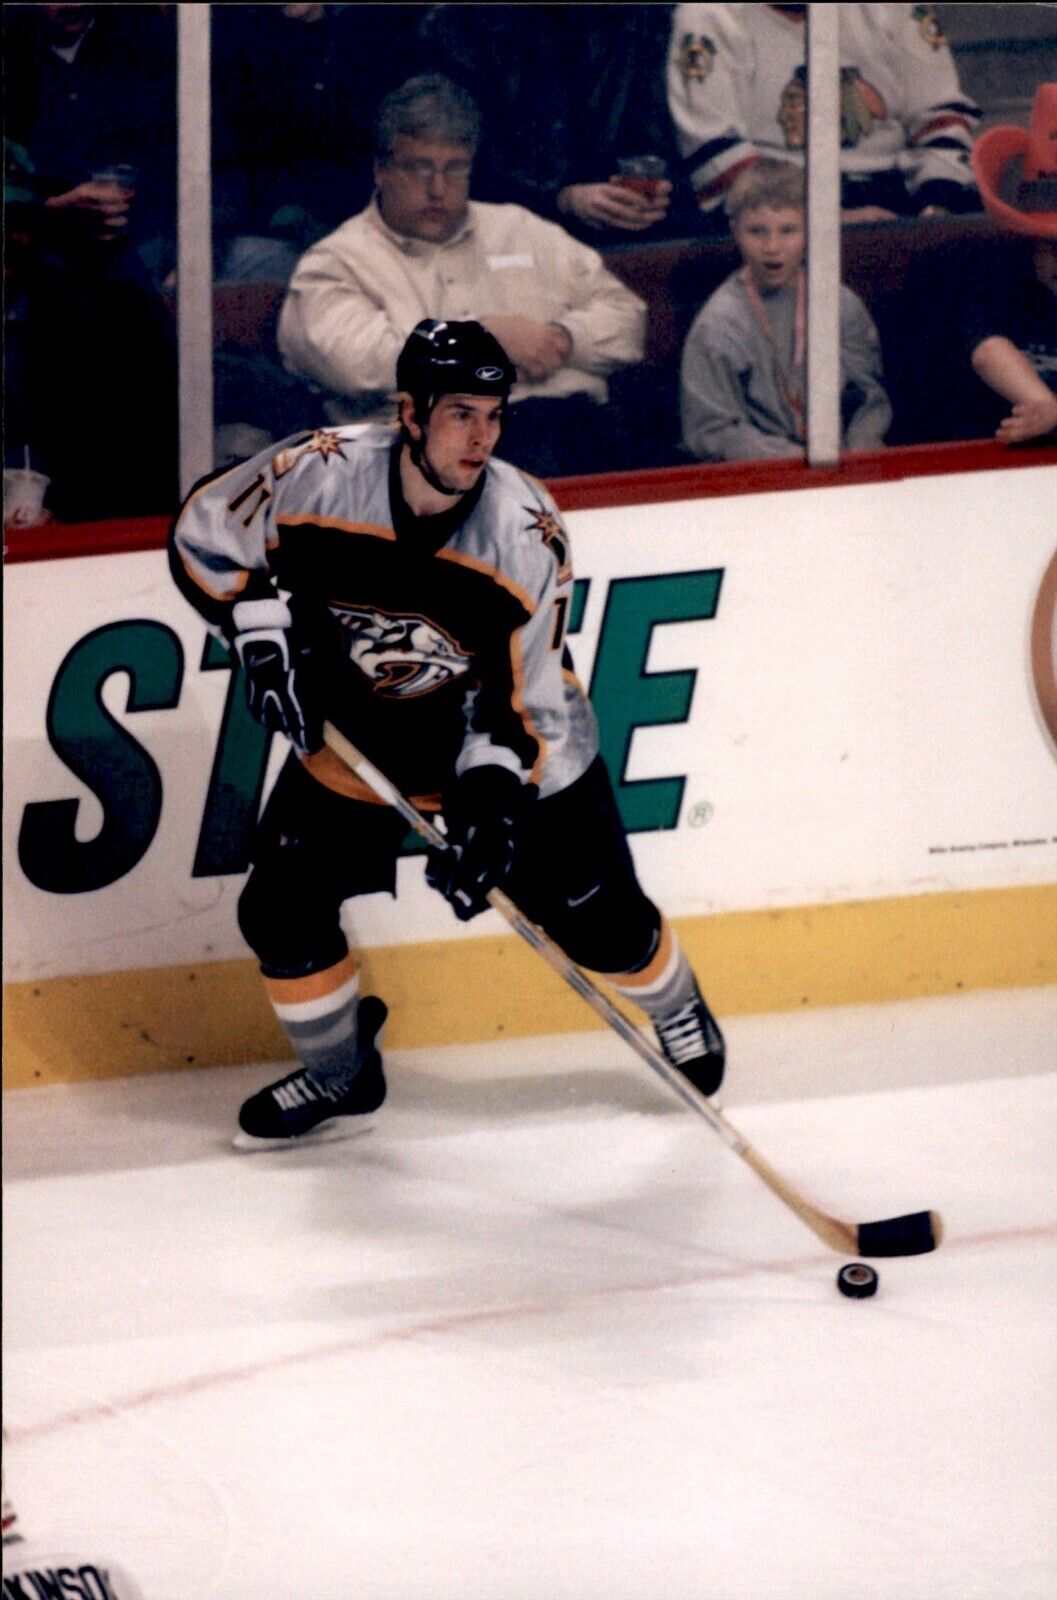 PF37 2001 Original Photo NASHVILLE PREDATORS NHL HOCKEY CENTER DAVID LEGWAND